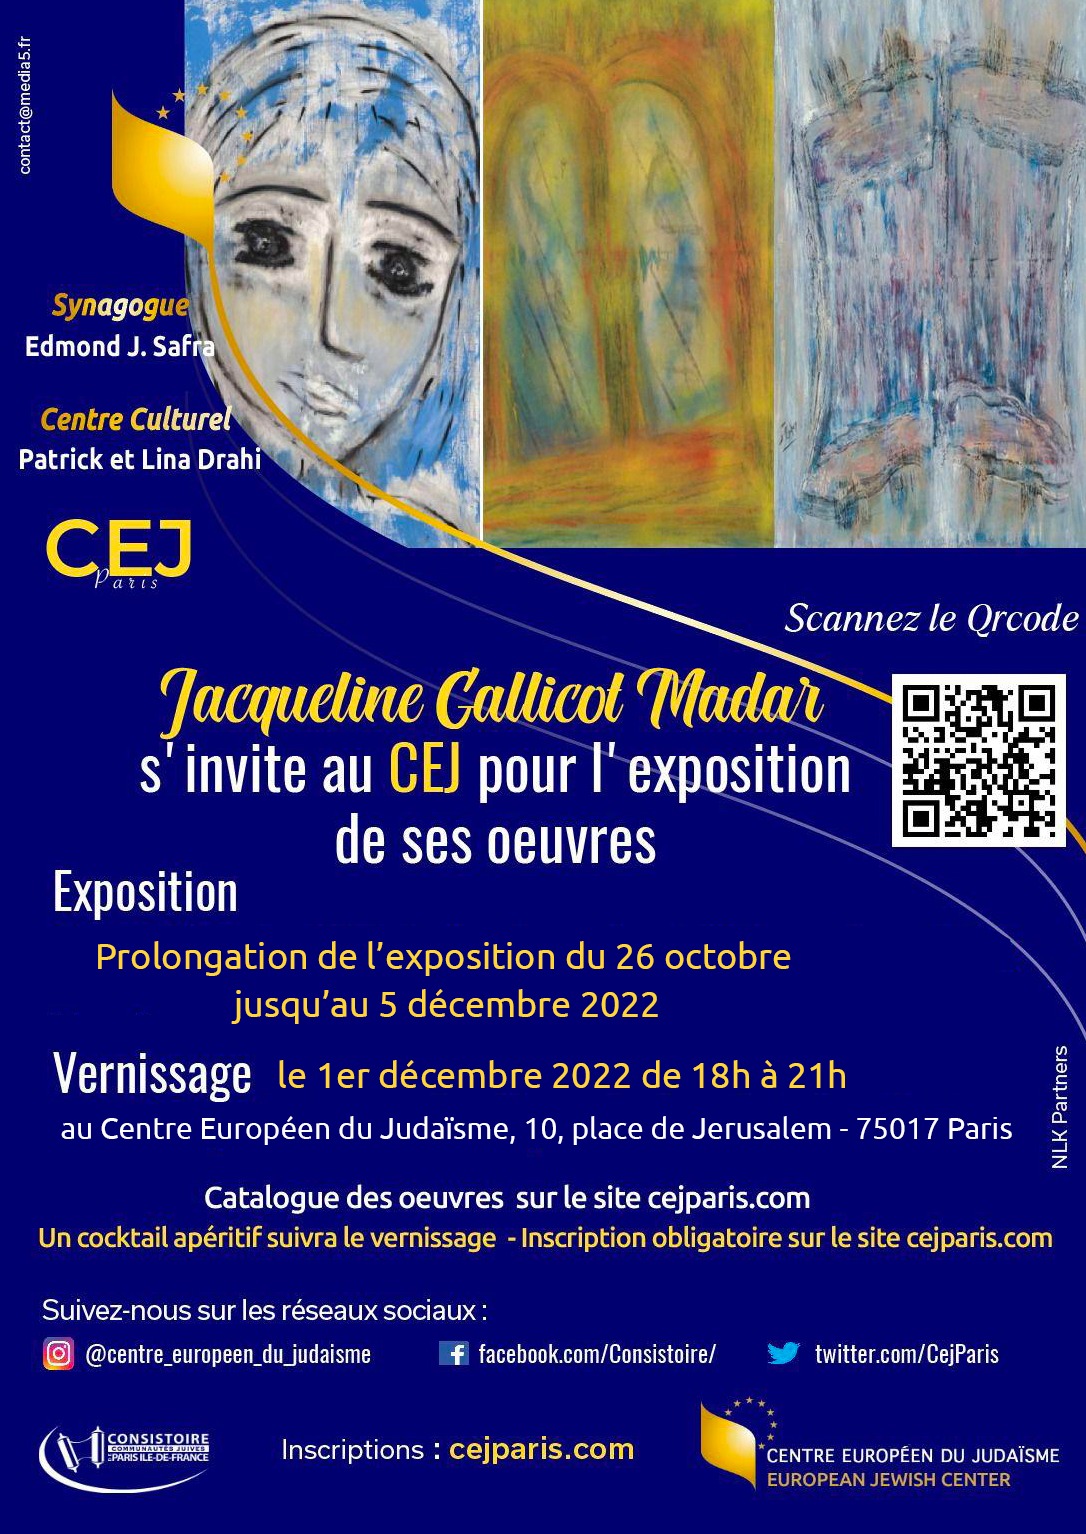 Exposition Jacqueline Gallicot-Madar